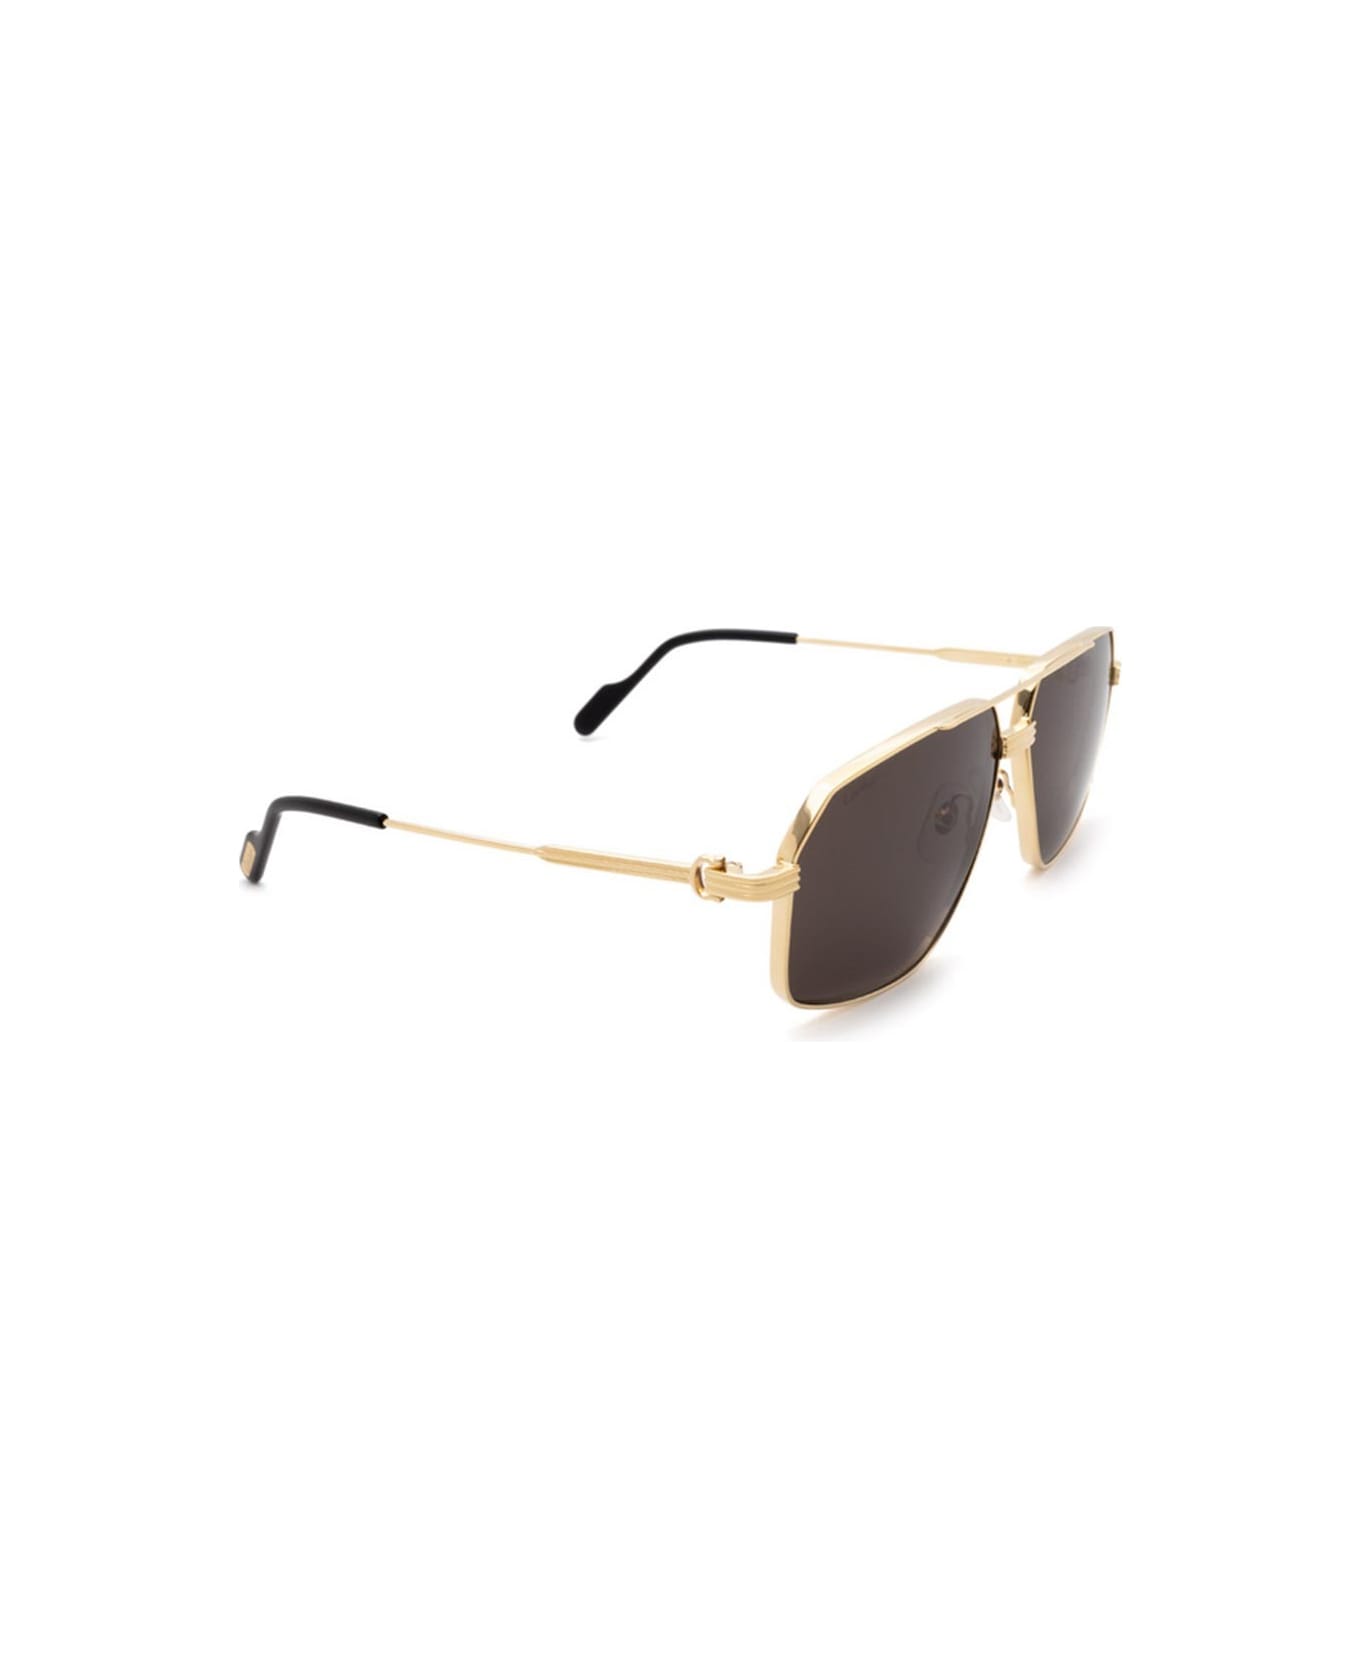 Cartier Eyewear Sunglasses Bottega - Oro/Marrone